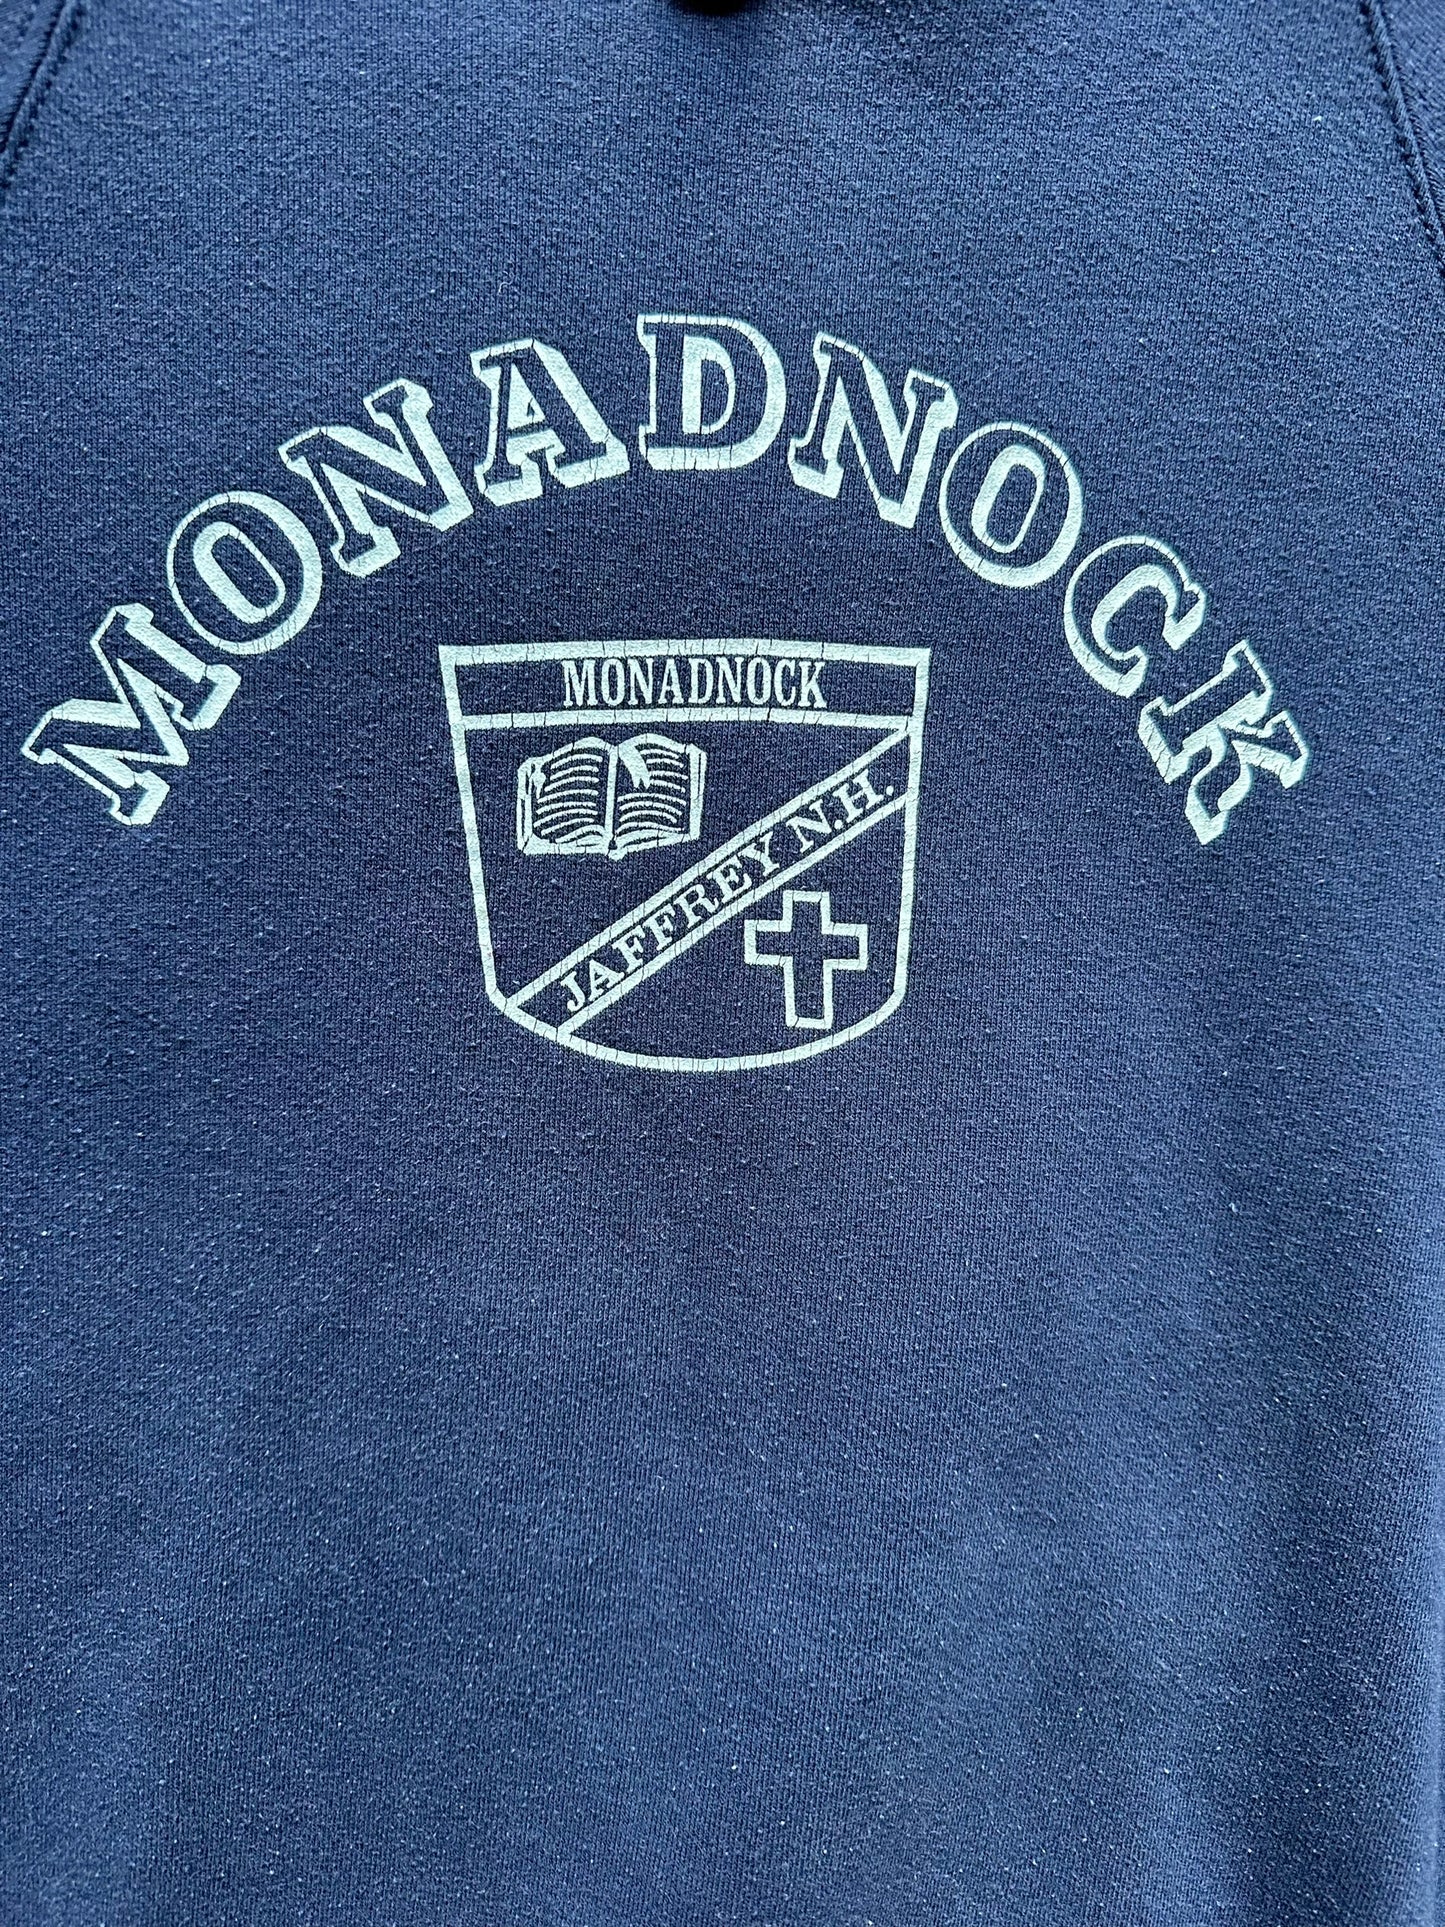 Graphic Detail on Vintage Monadnock Collegiate Pacific Sweatshirt SZ L | Vintage Jaffrey NH Crewneck Sweatshirts Seattle | Barn Owl Vintage Seattle